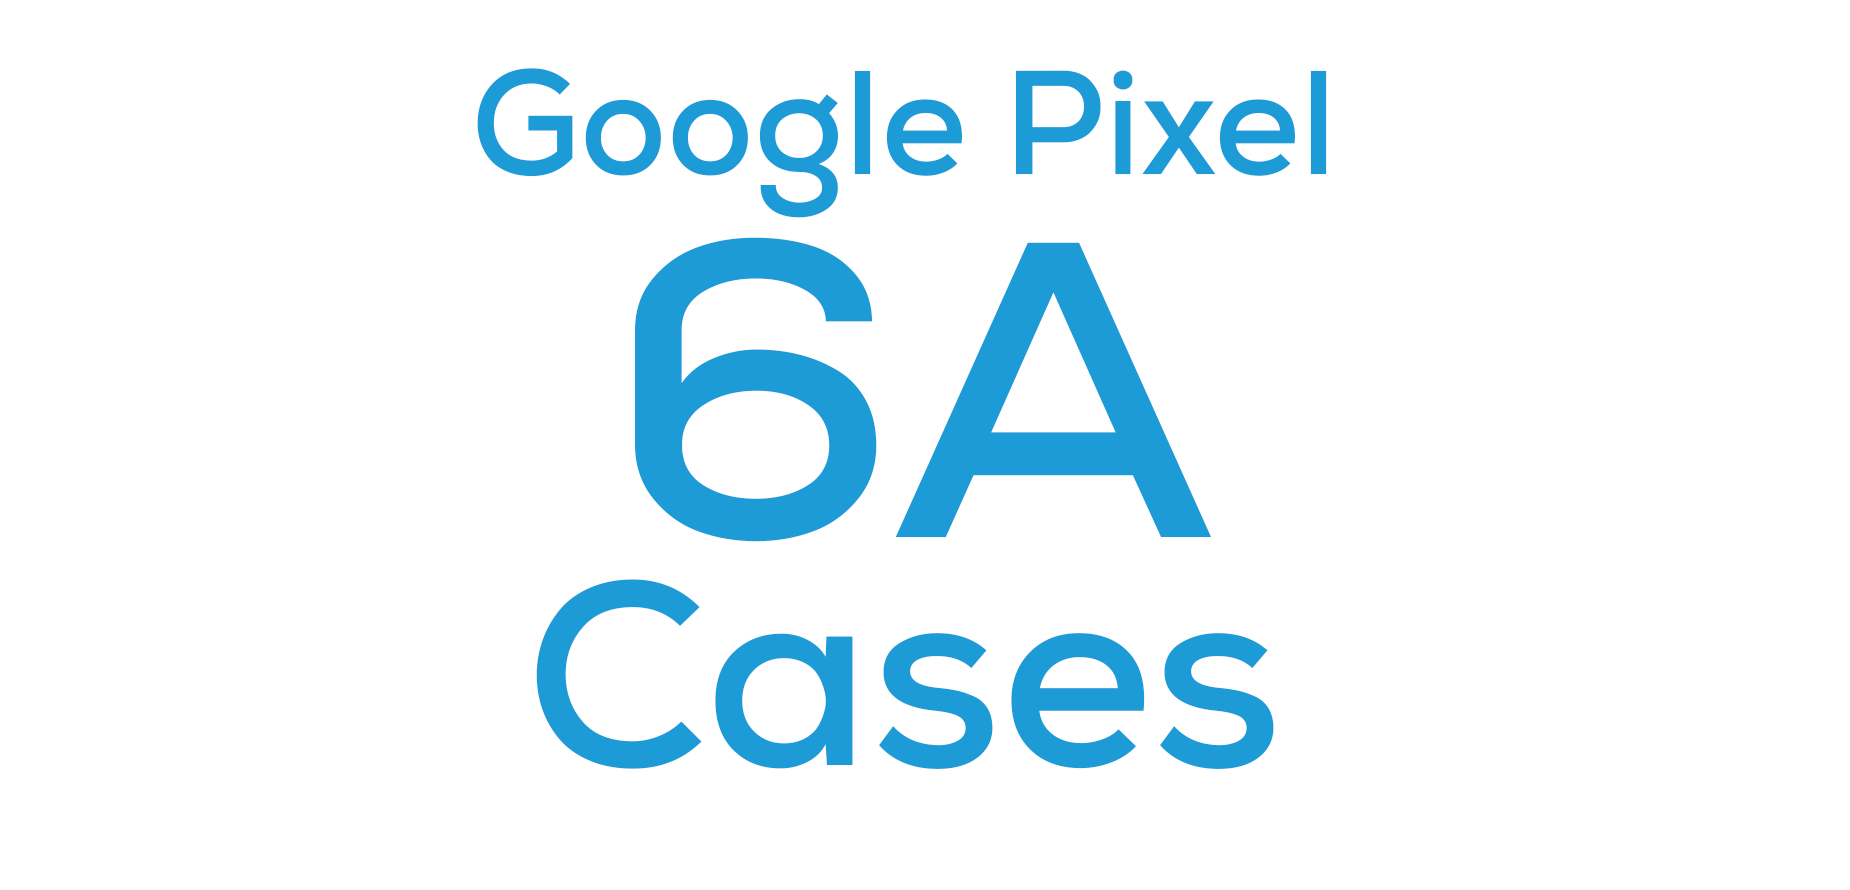 Google Pixel 6A Cases